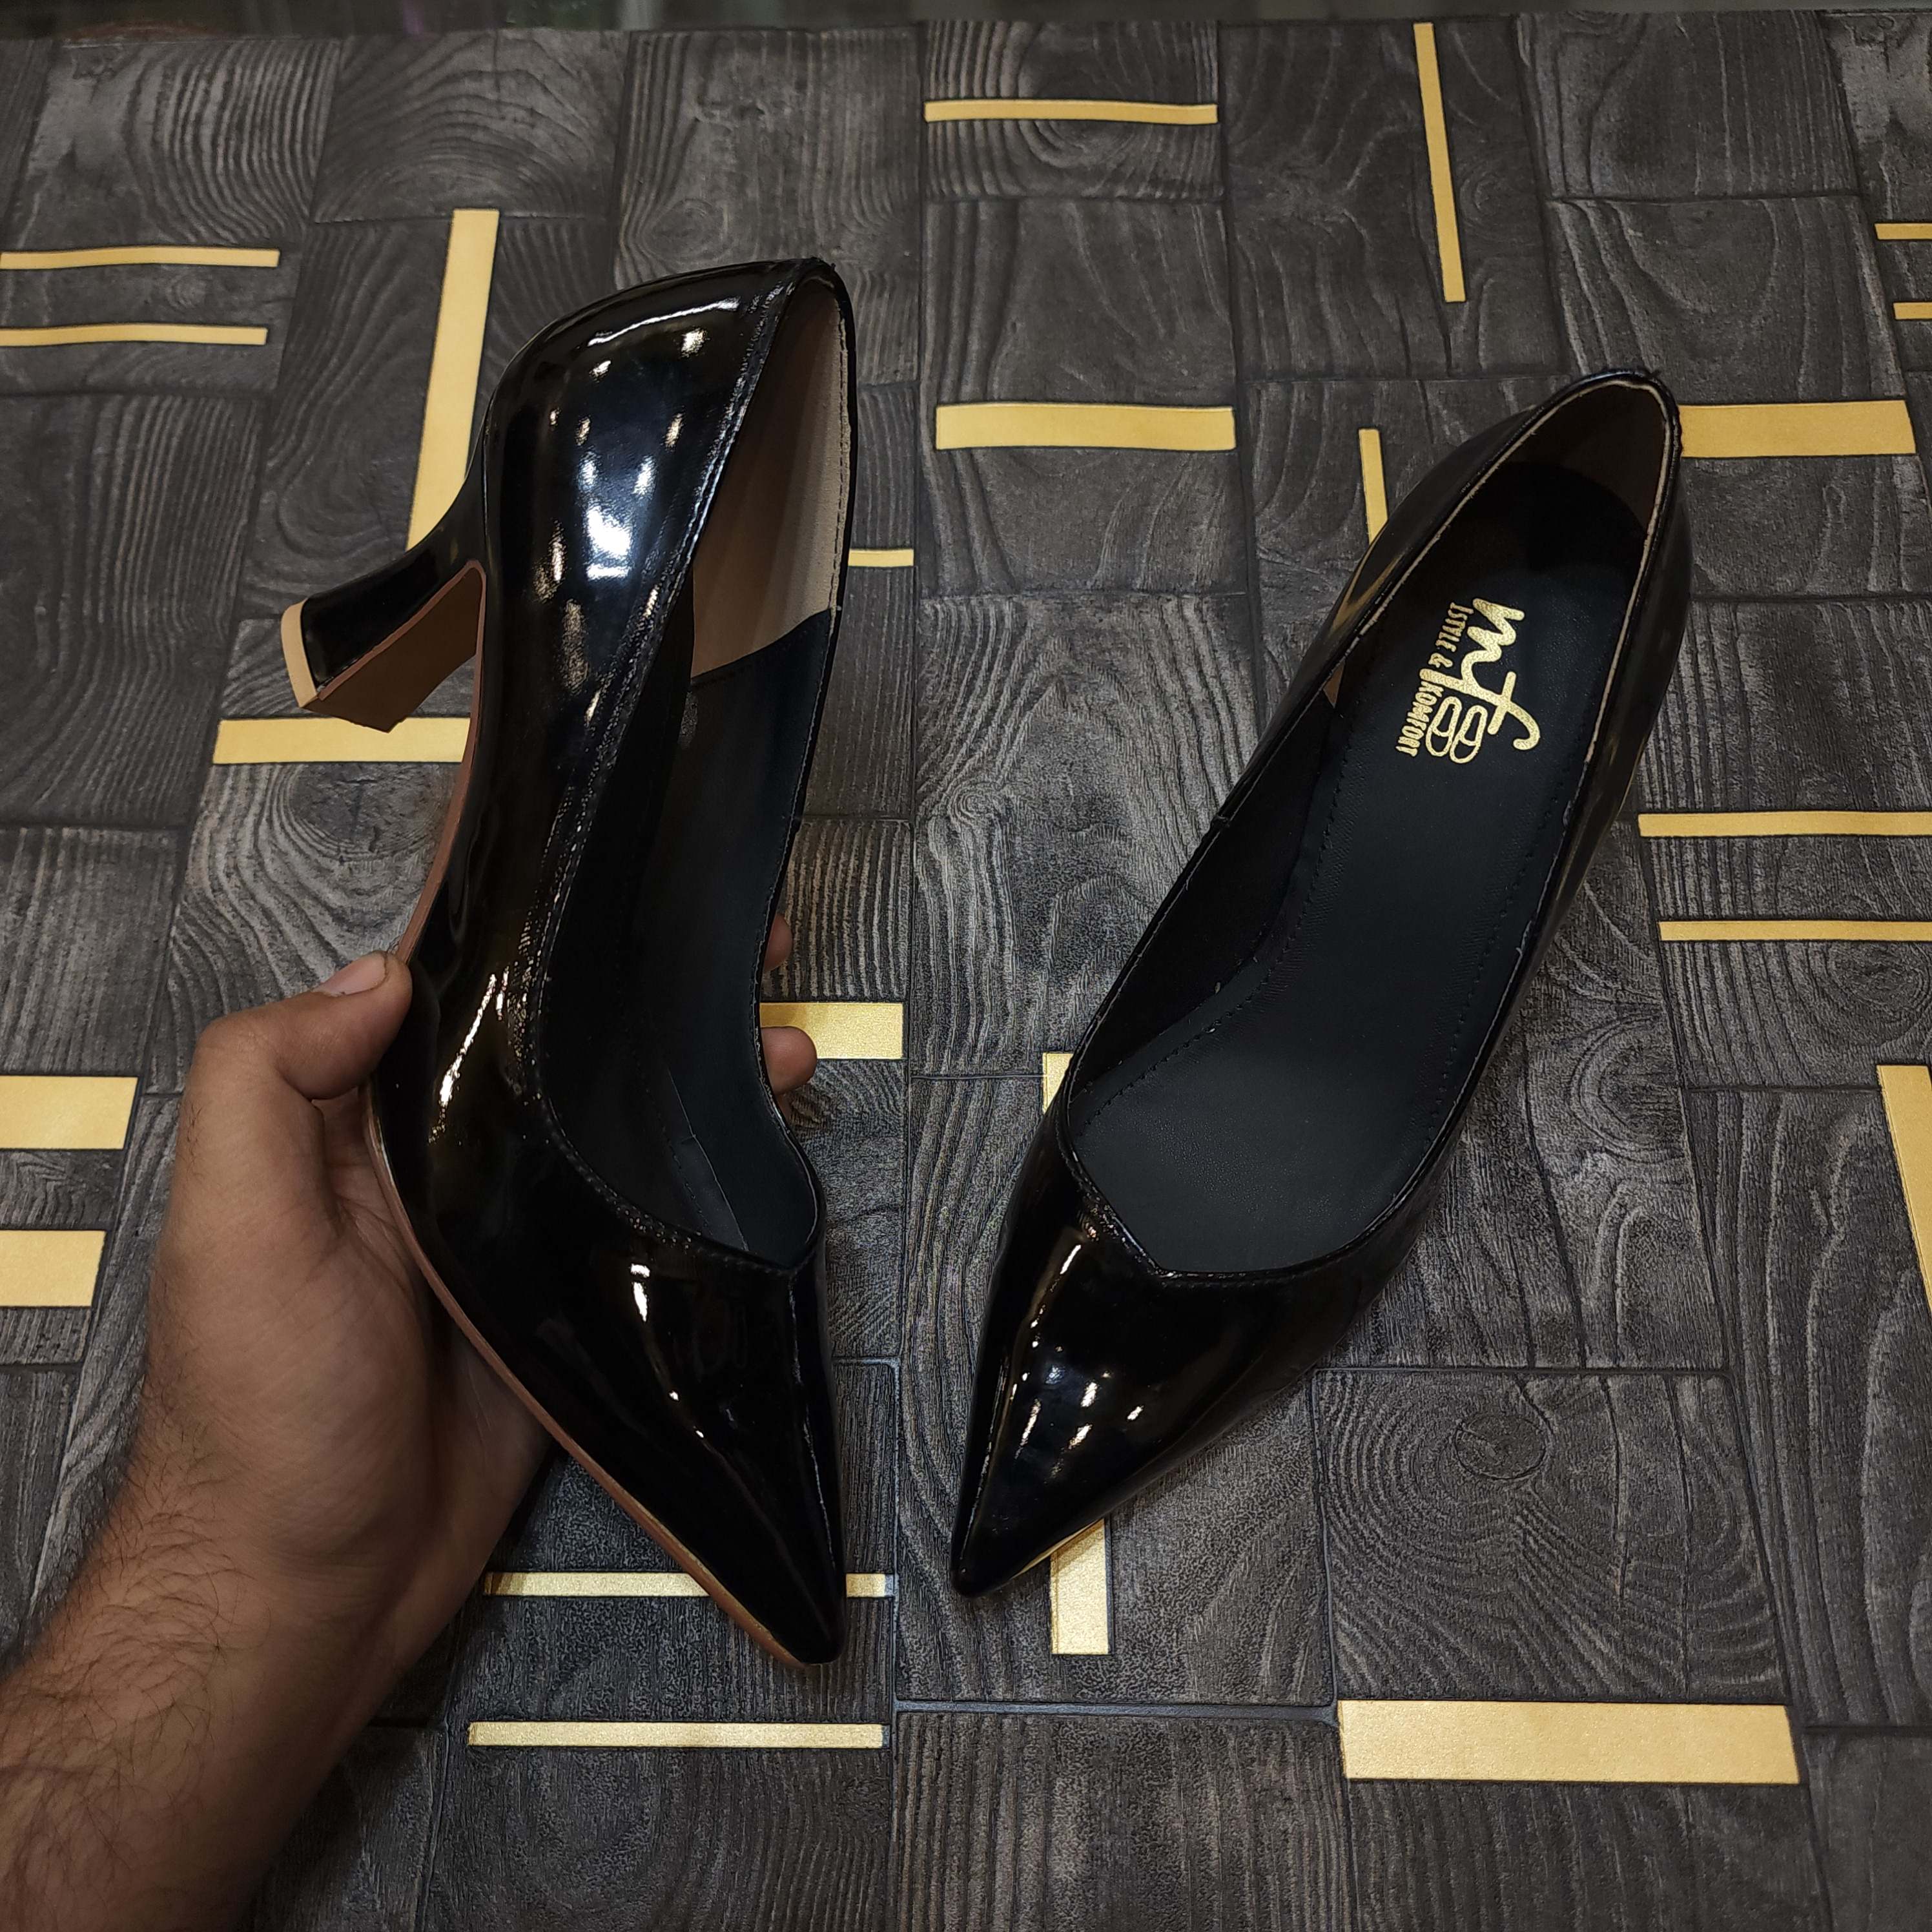 Black Patent Court Shoes - Maha fashions -  